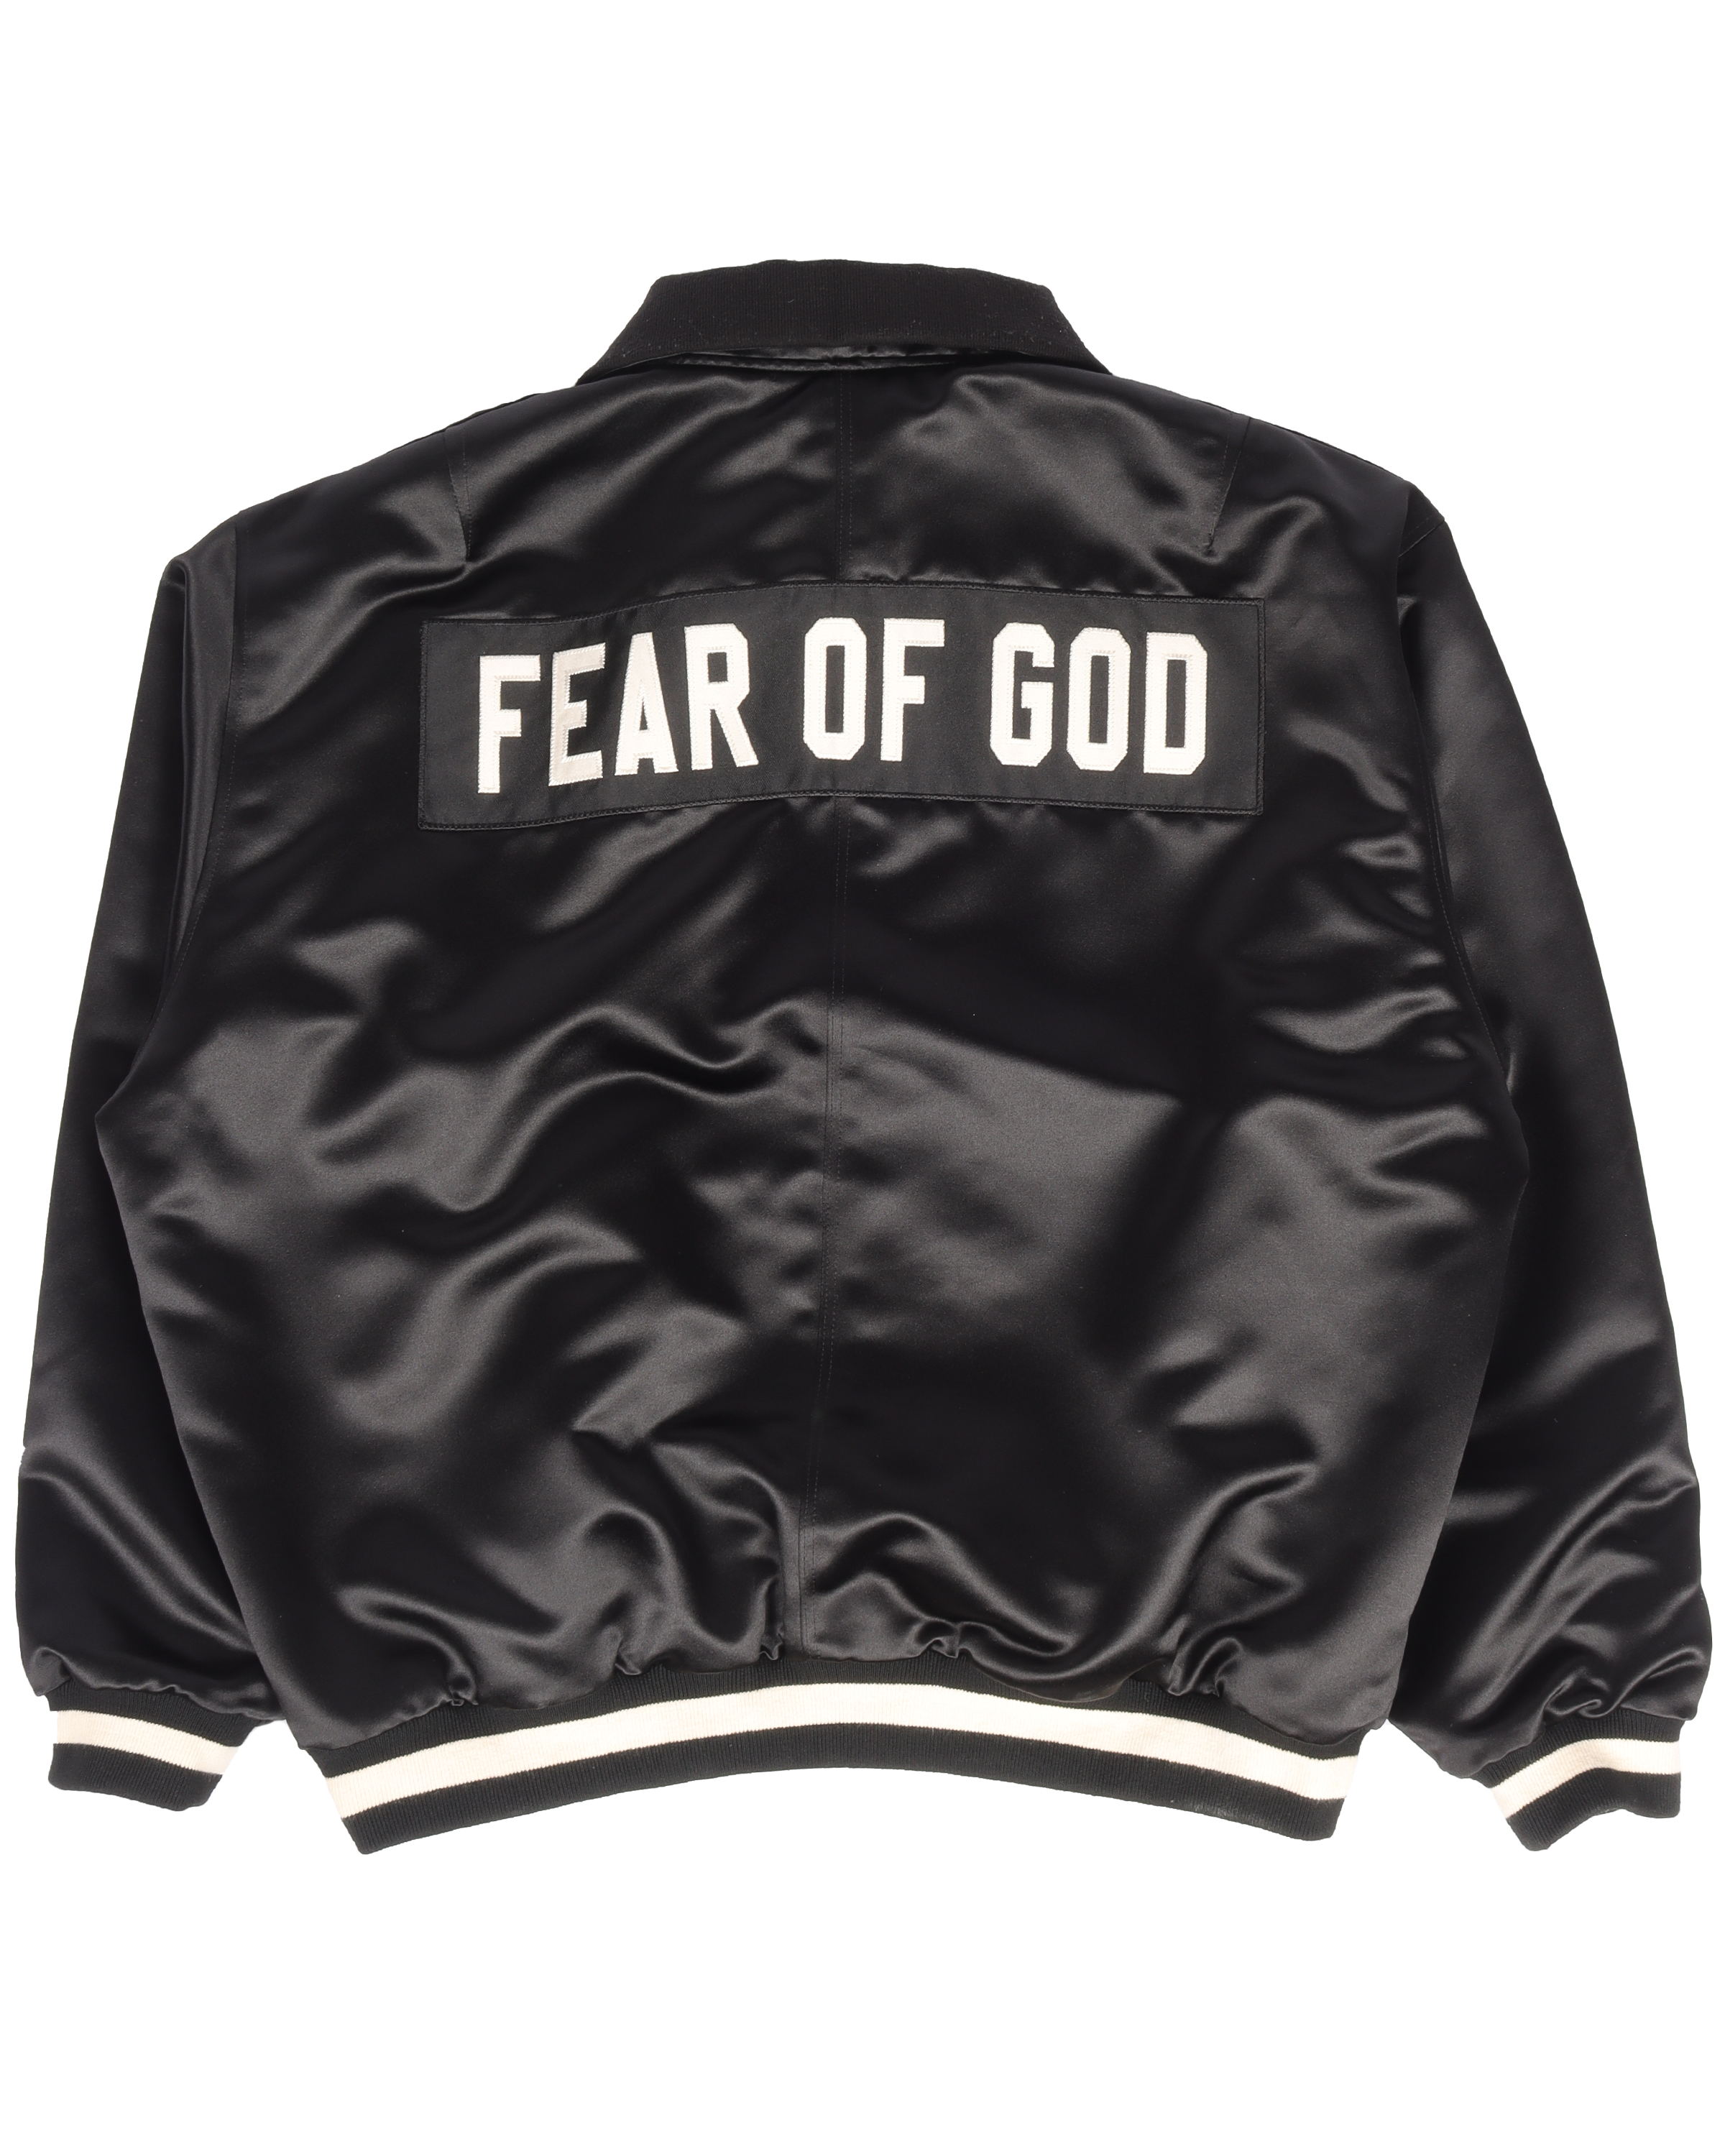 Fear of God Fifth Collection Nylon Varsity Jacket (2017)